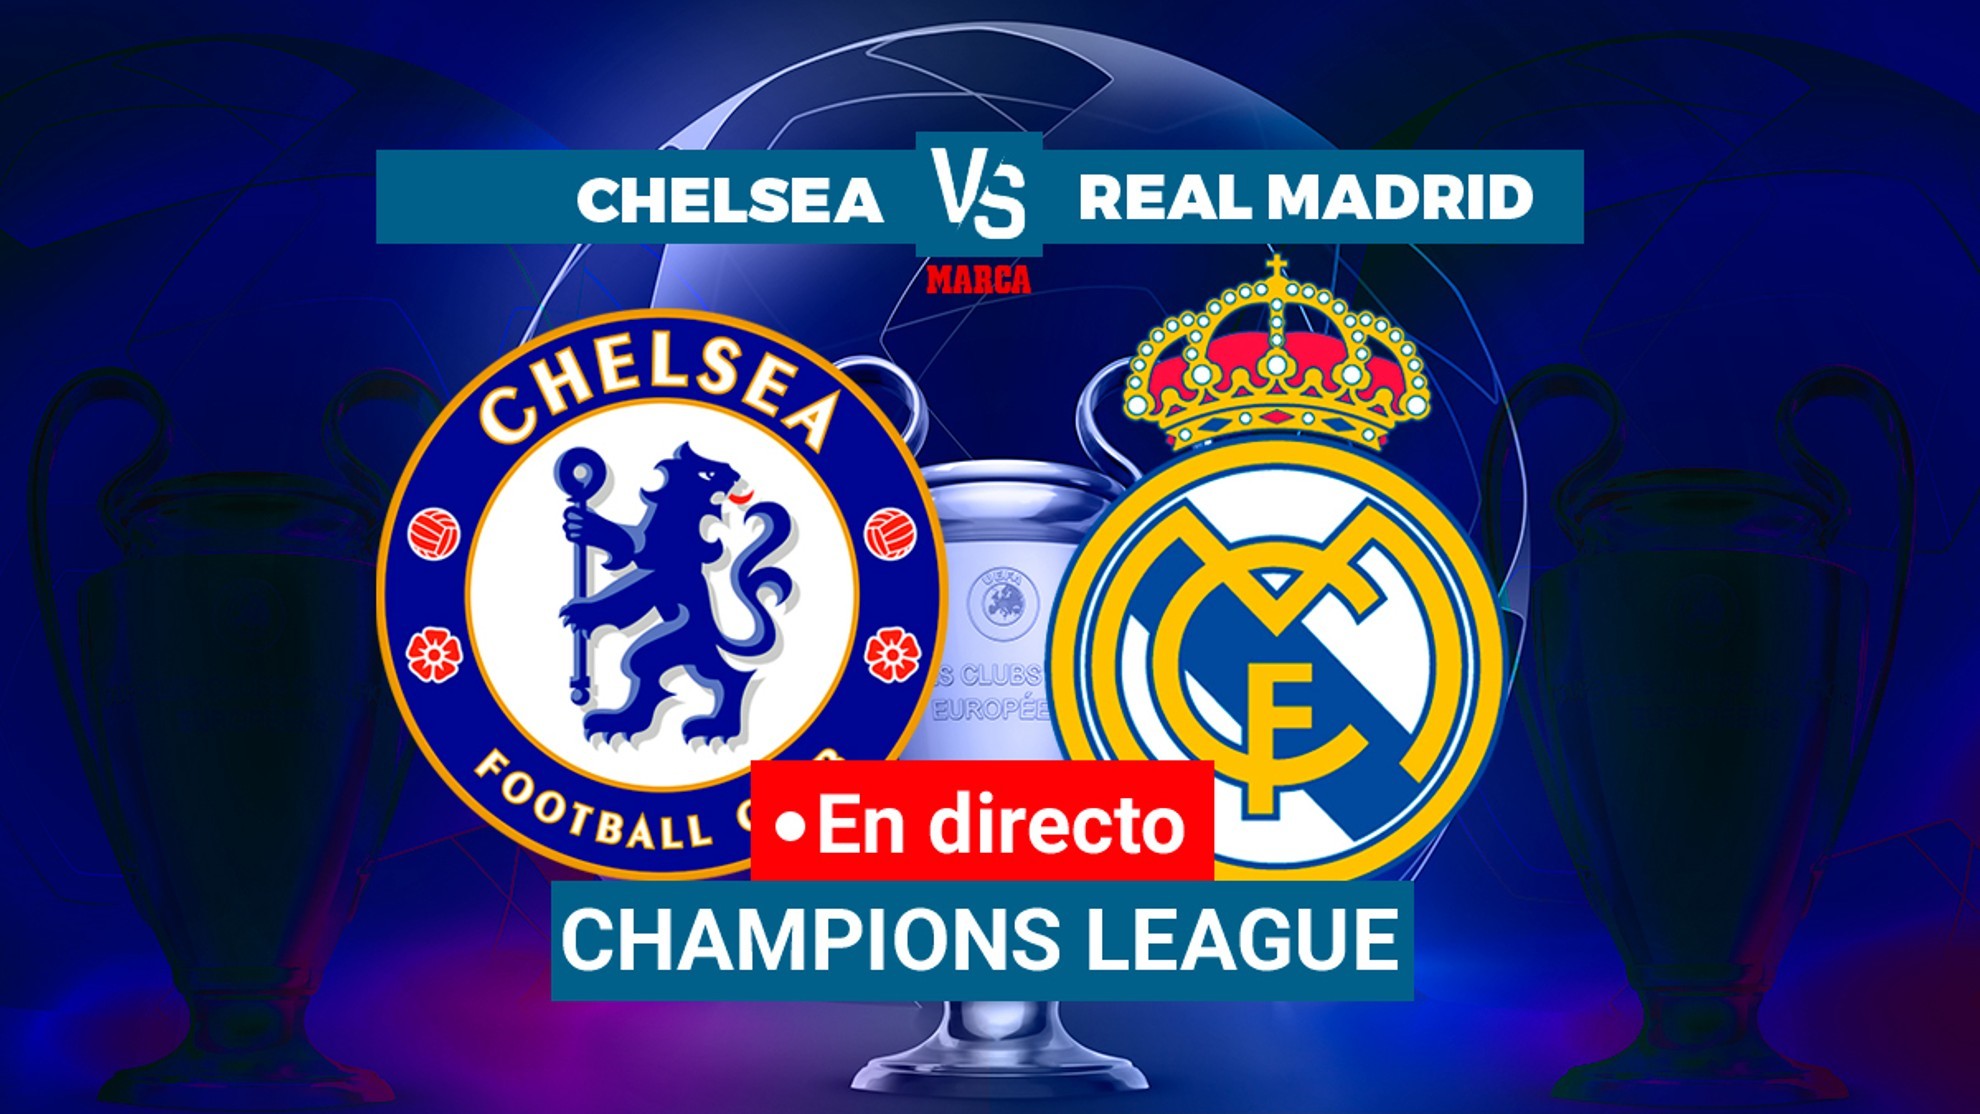 Chelsea vs Real Madrid live Champions League quarterfinals